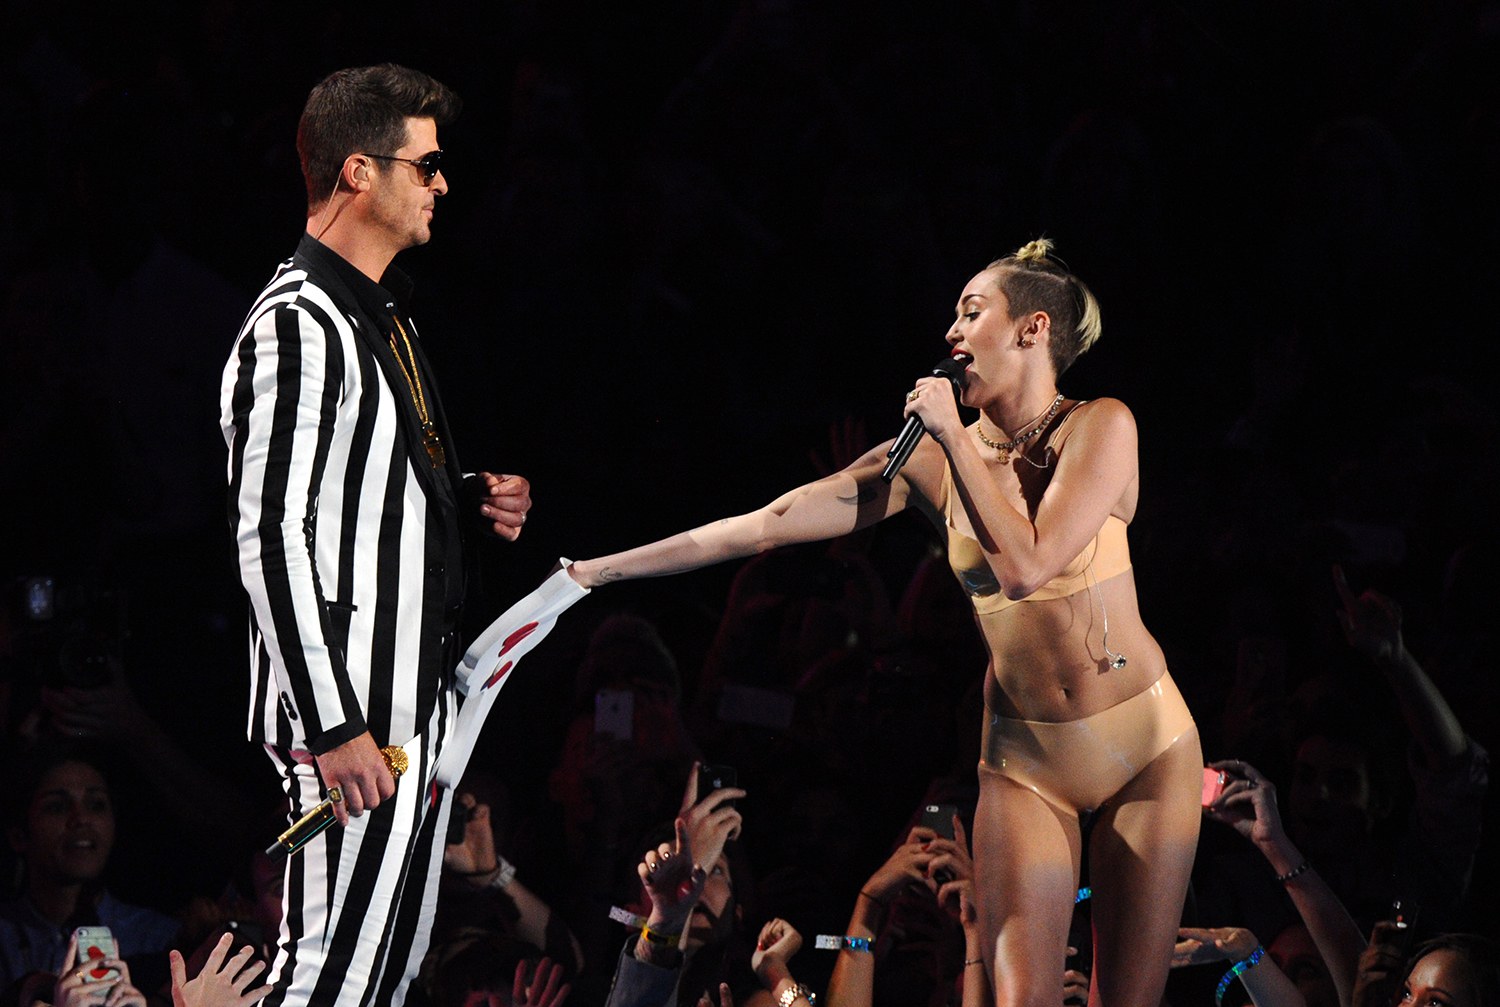 Xxx Miley Cyrus Xxx - Miley Cyrus gets embarrassingly raunchy at the VMAs